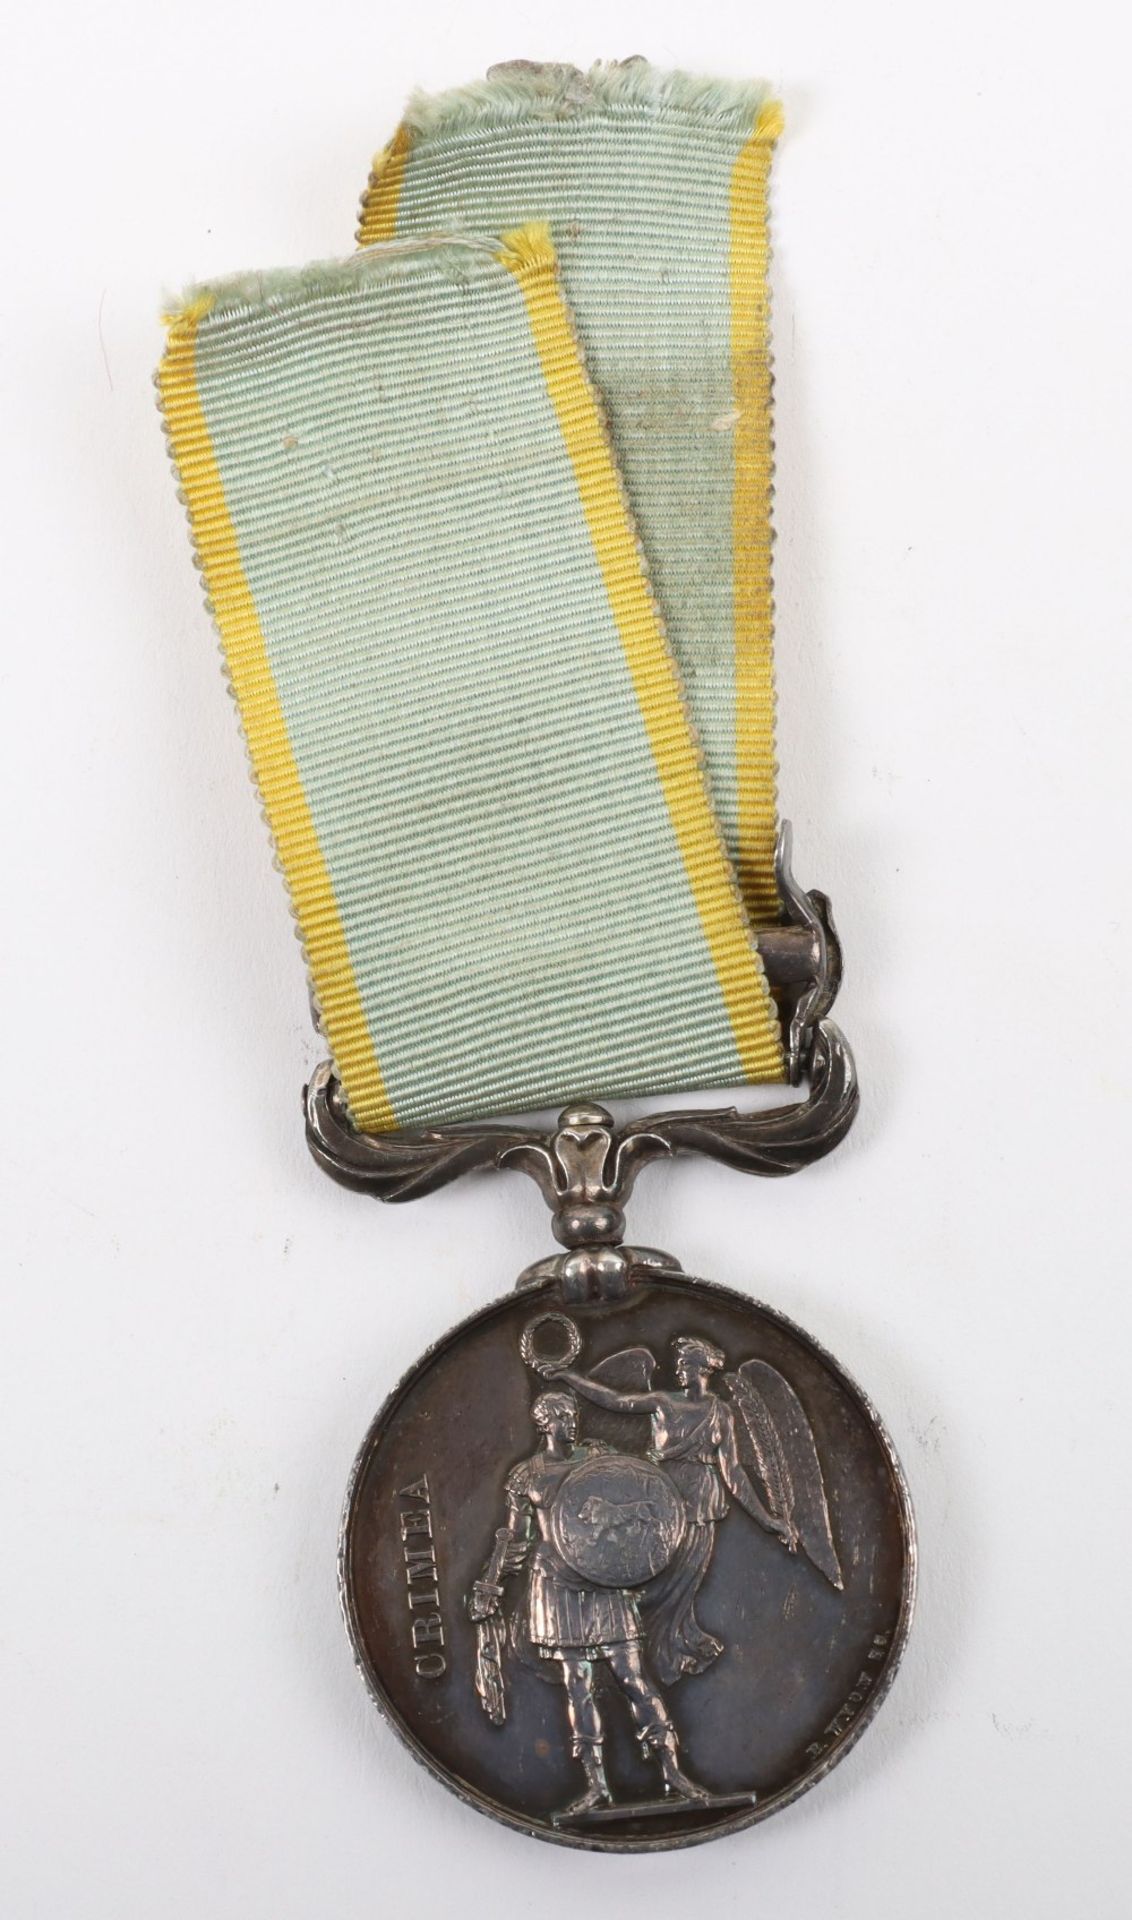 Crimea Medal 1854-56 - Image 2 of 2